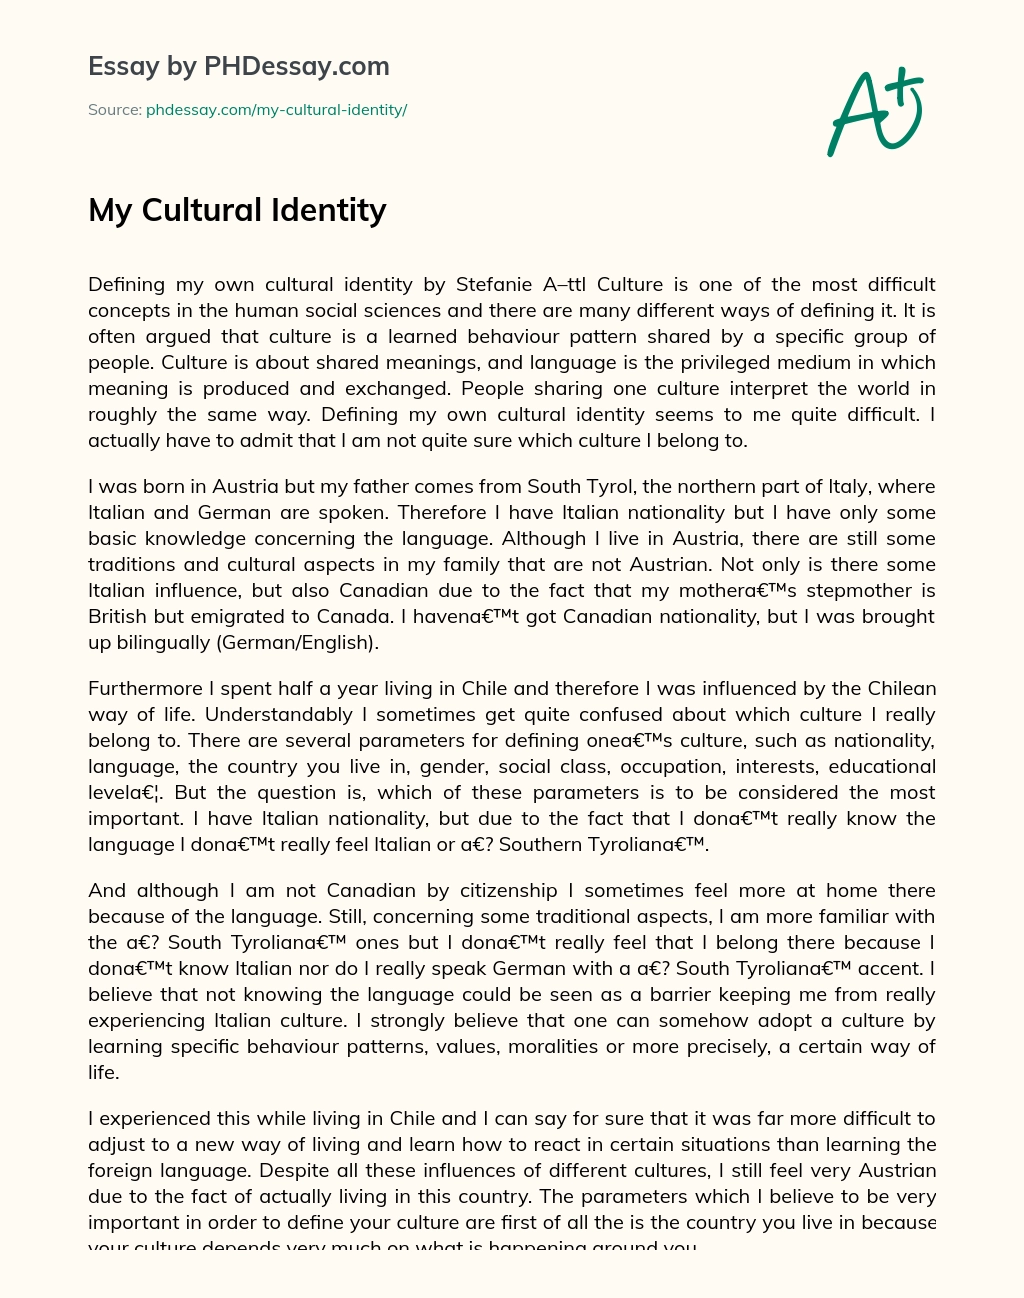 My Cultural Identity essay